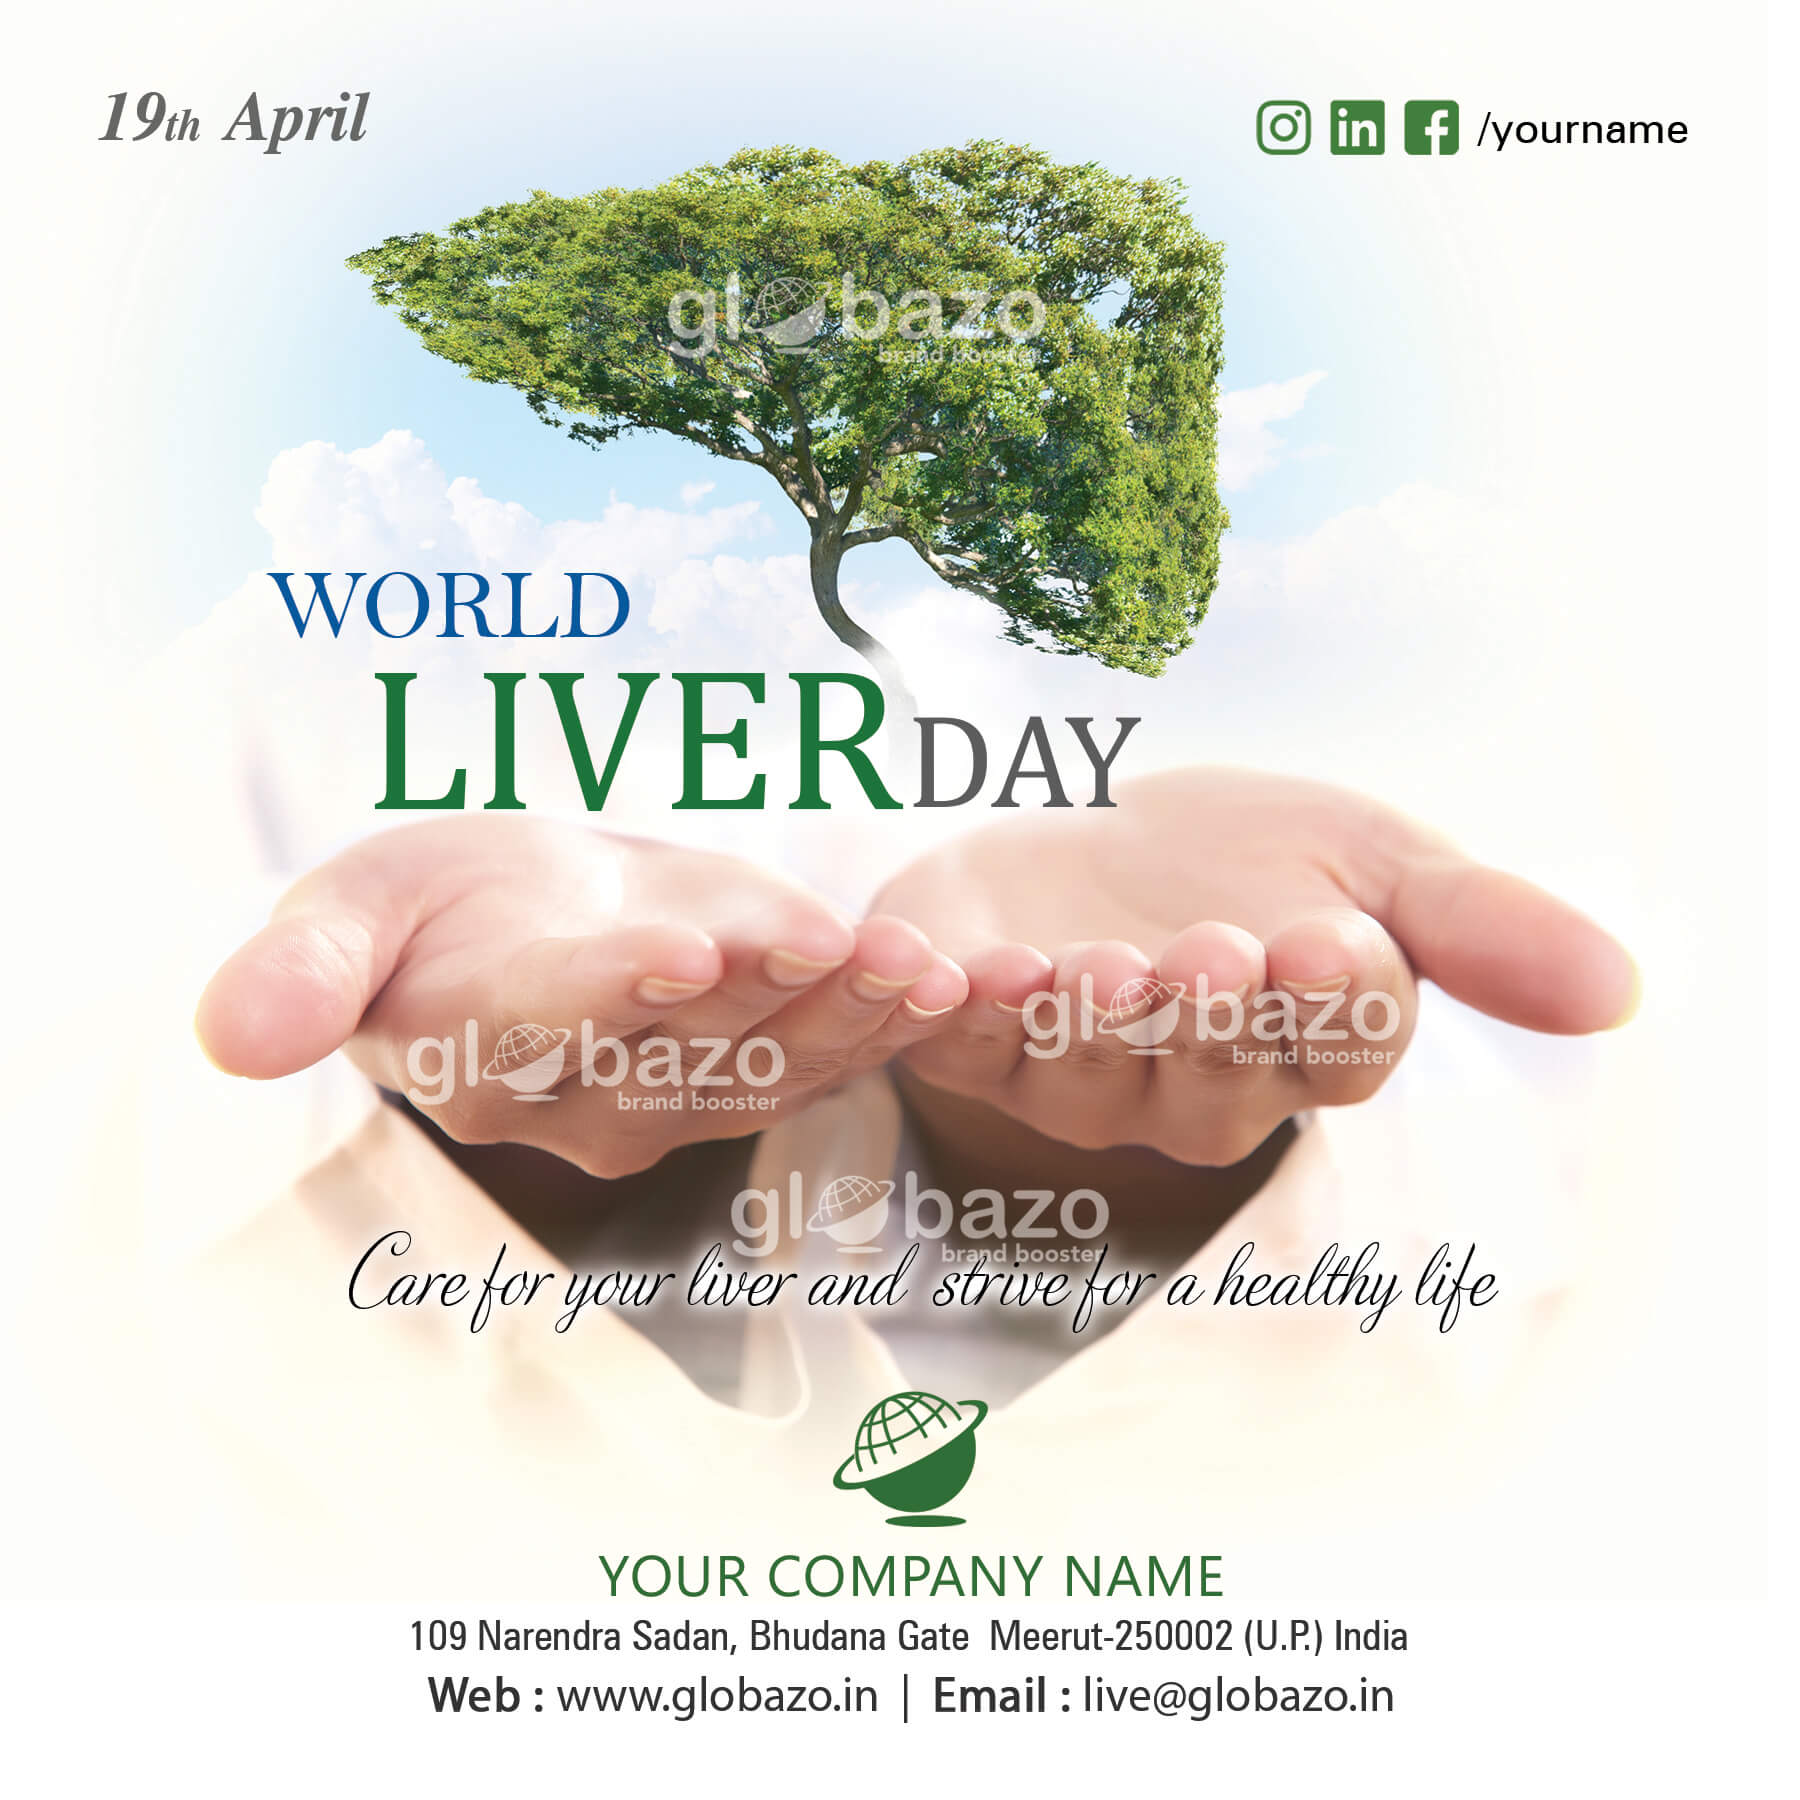 World Liver Day